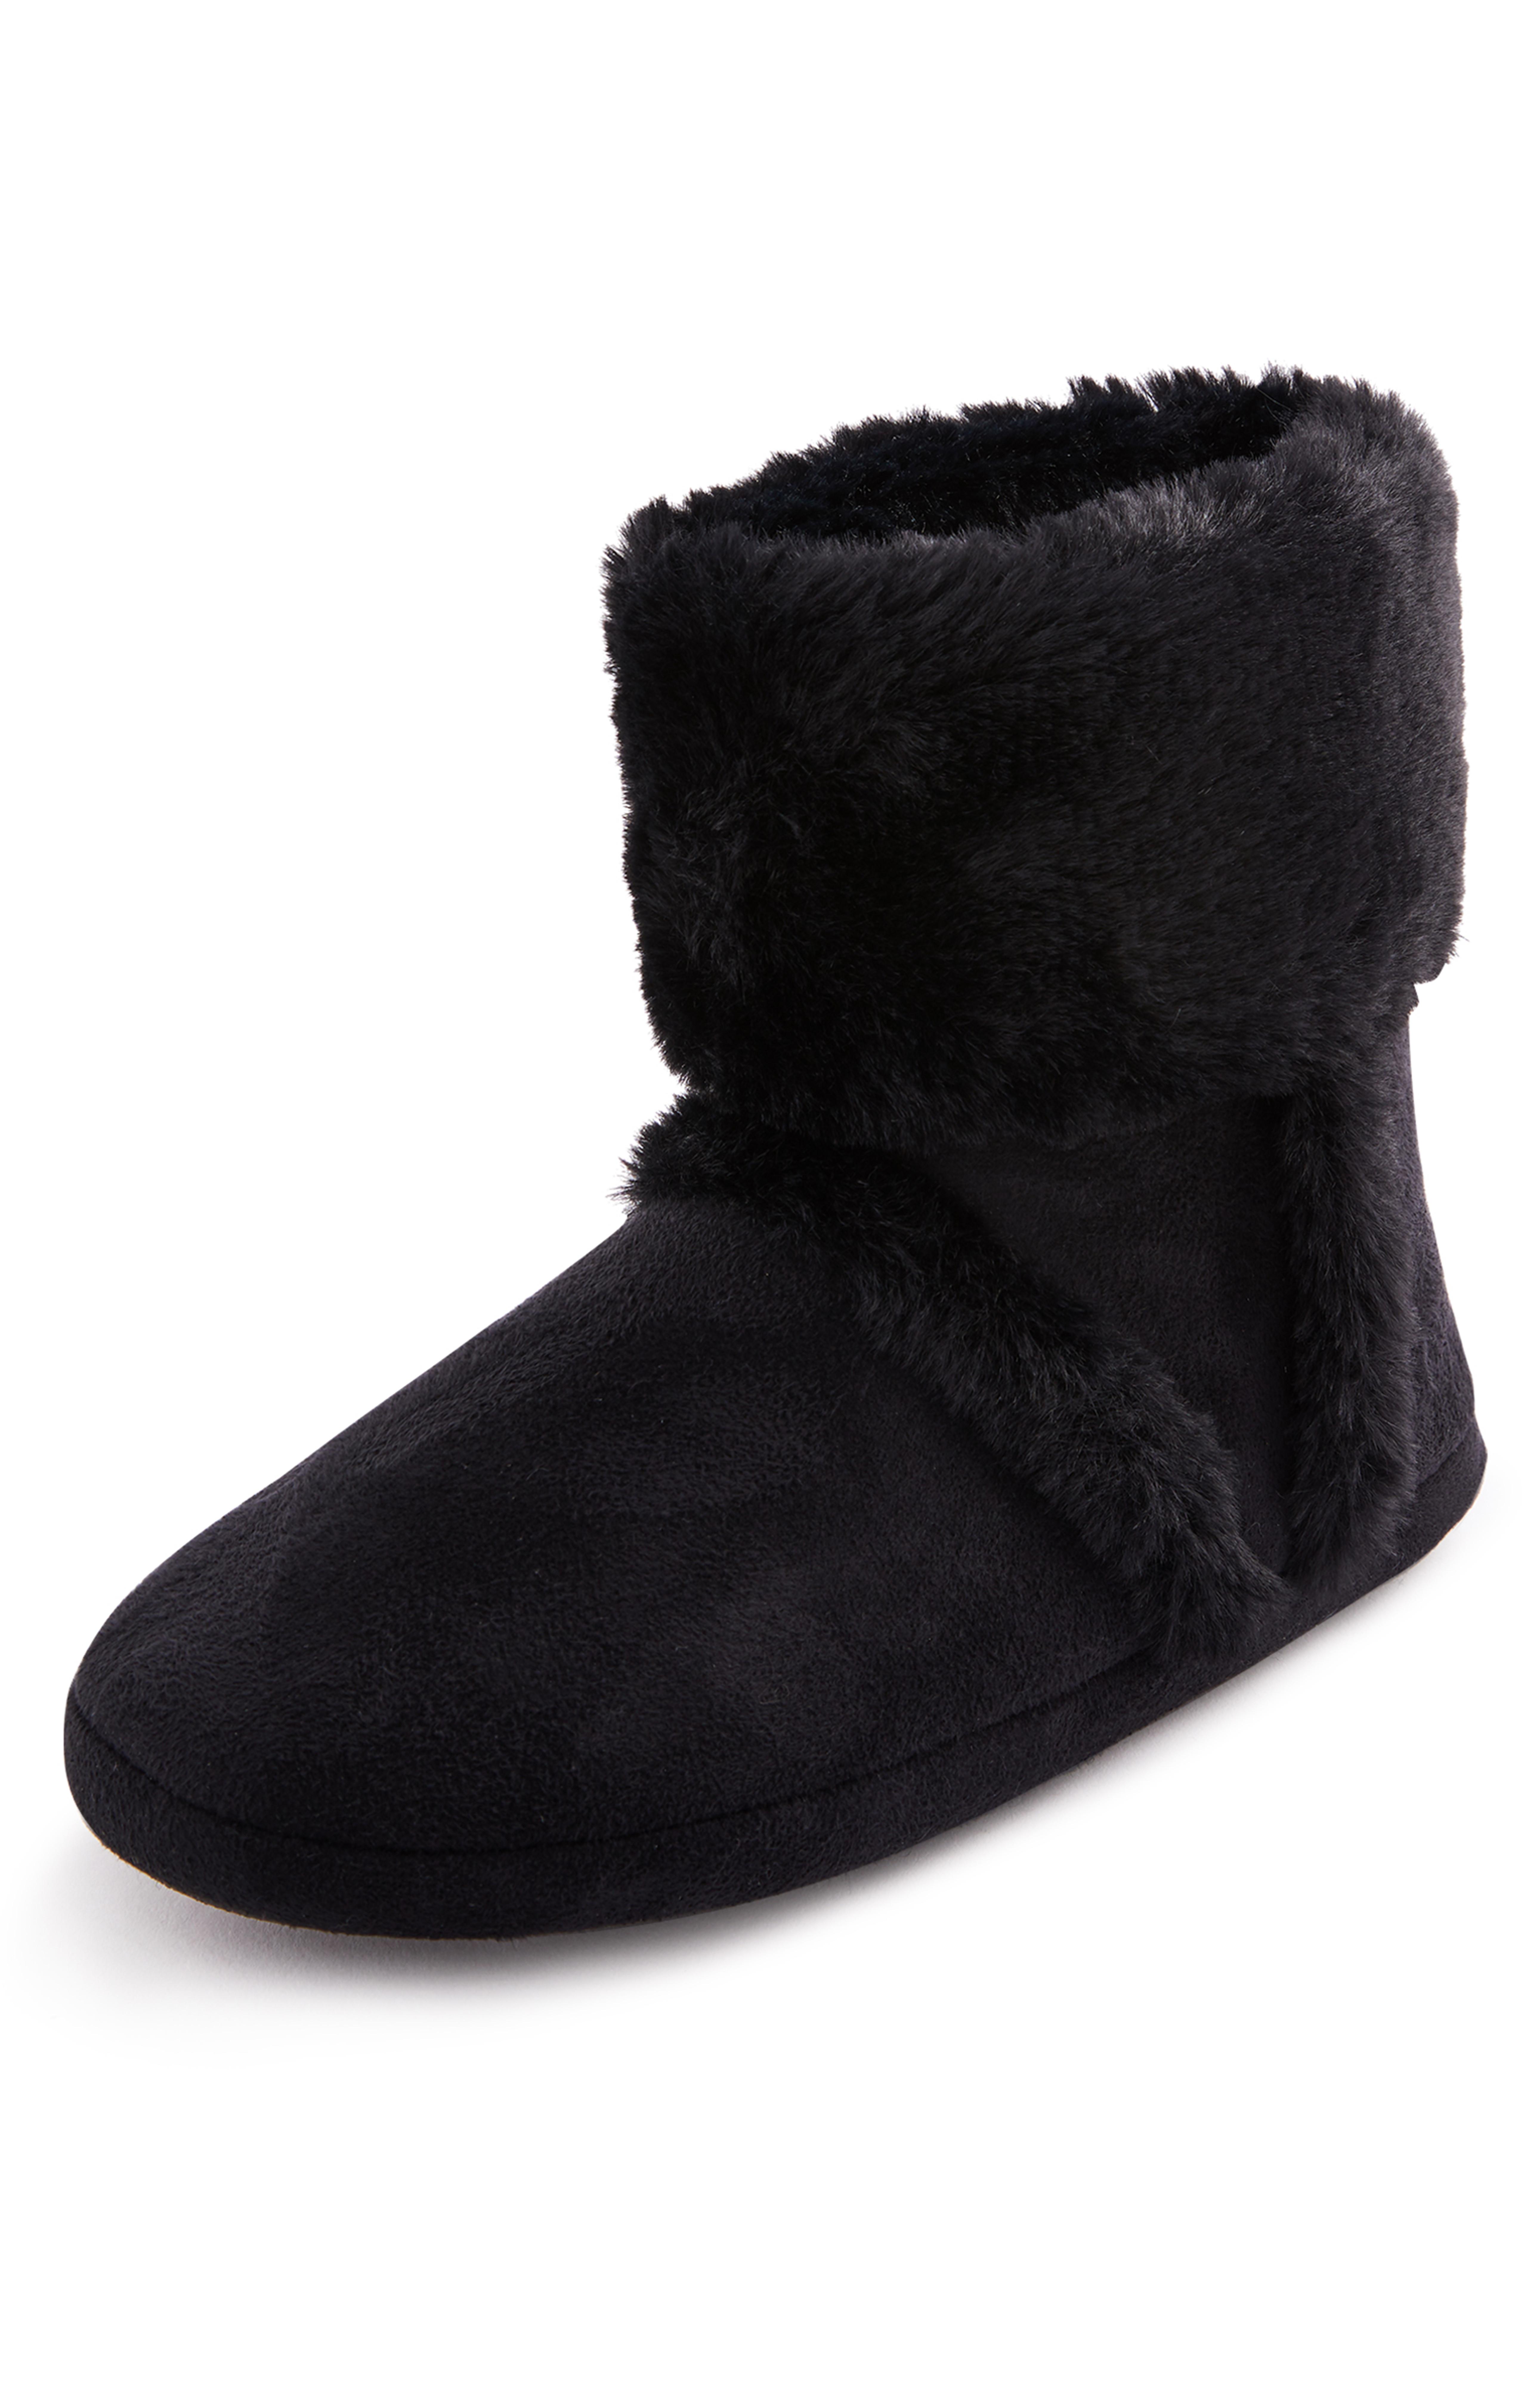 penneys womens winter boots